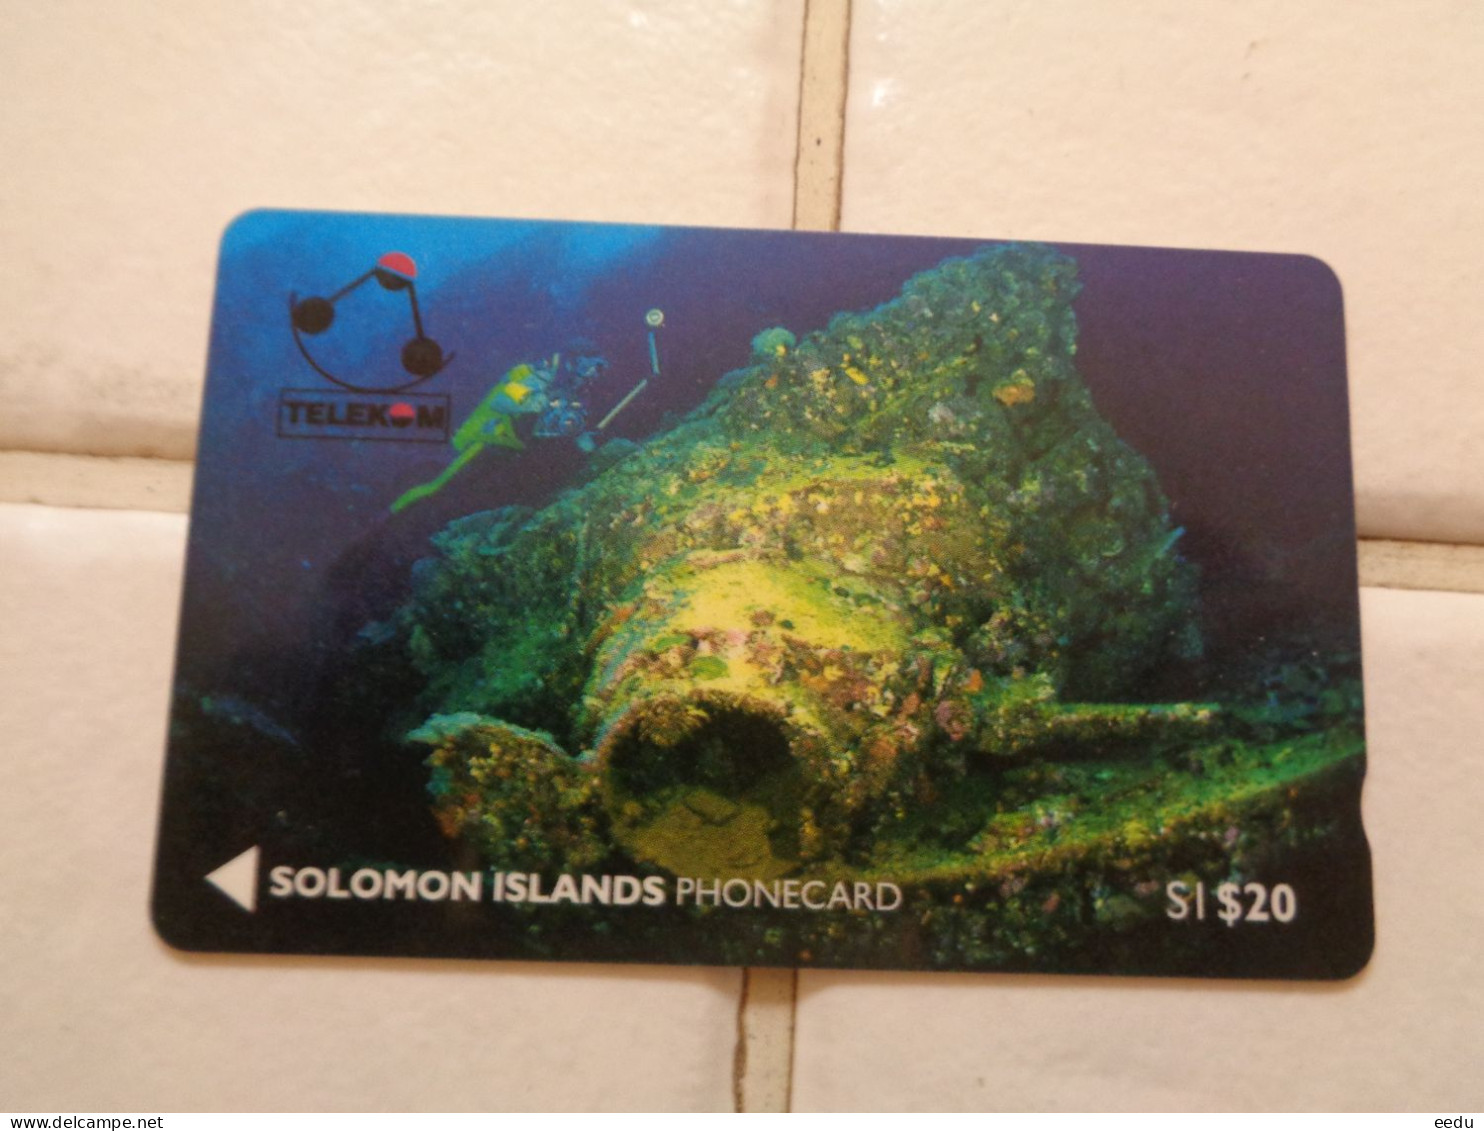 Solomon Island Phonecard - Salomon